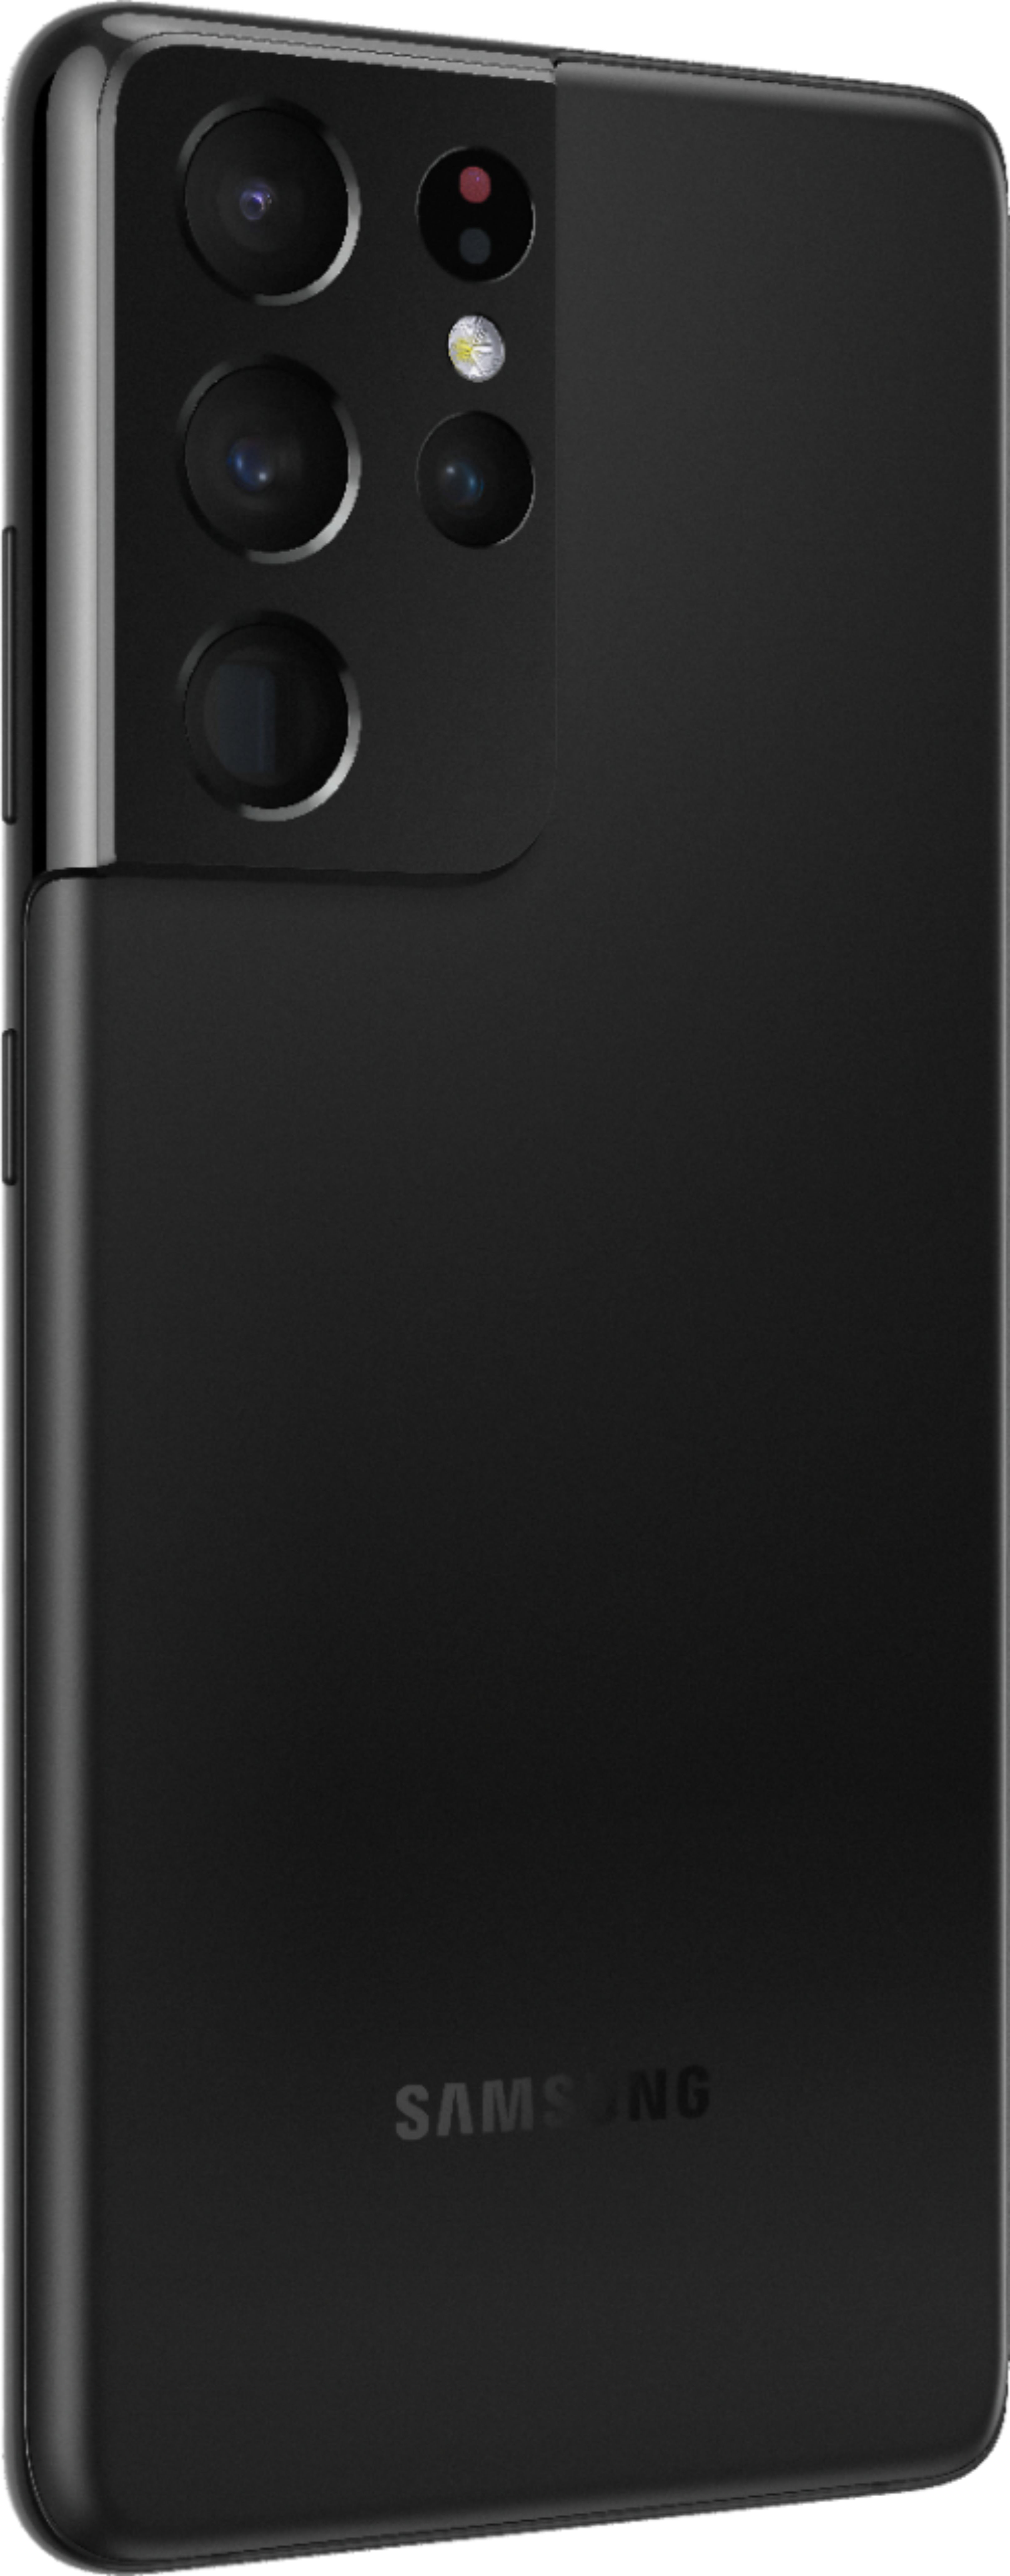 New Samsung Galaxy S21 Ultra 5G 256 GB Black in Accra Metropolitan